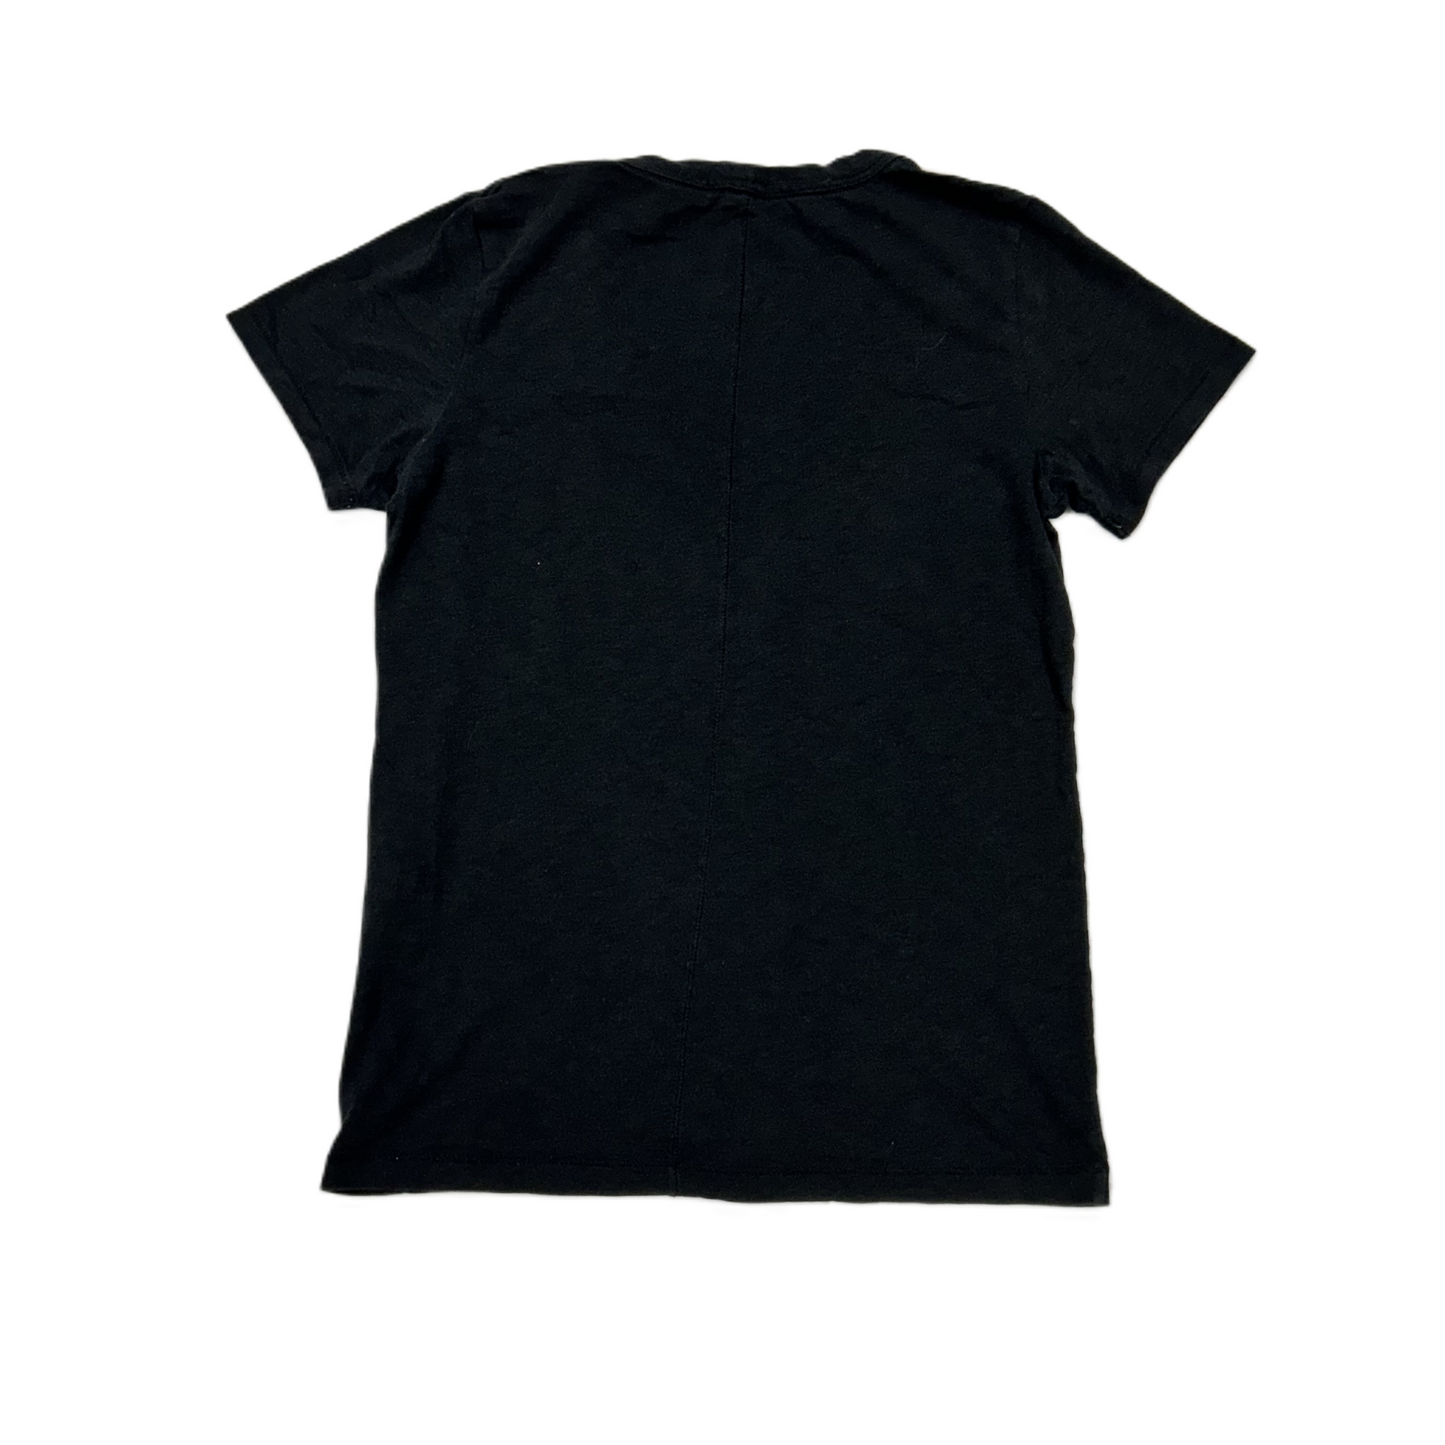 Black Top Short Sleeve Designer By Rag And Bone, Size: Xs